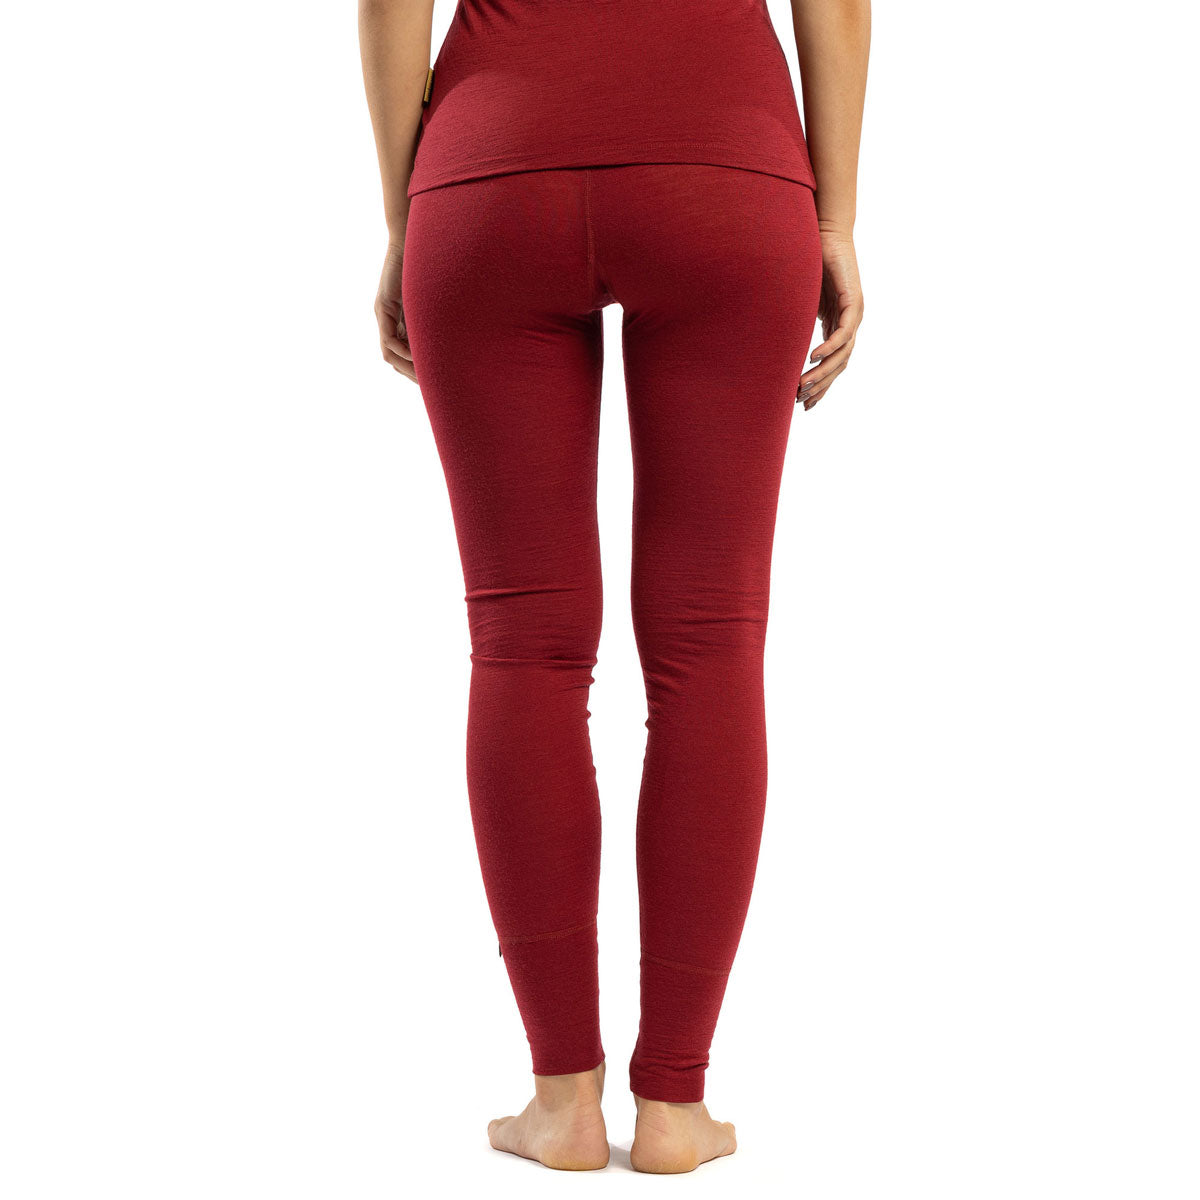 menique Women's Merino 160 Pants Royal Cherry Red Color